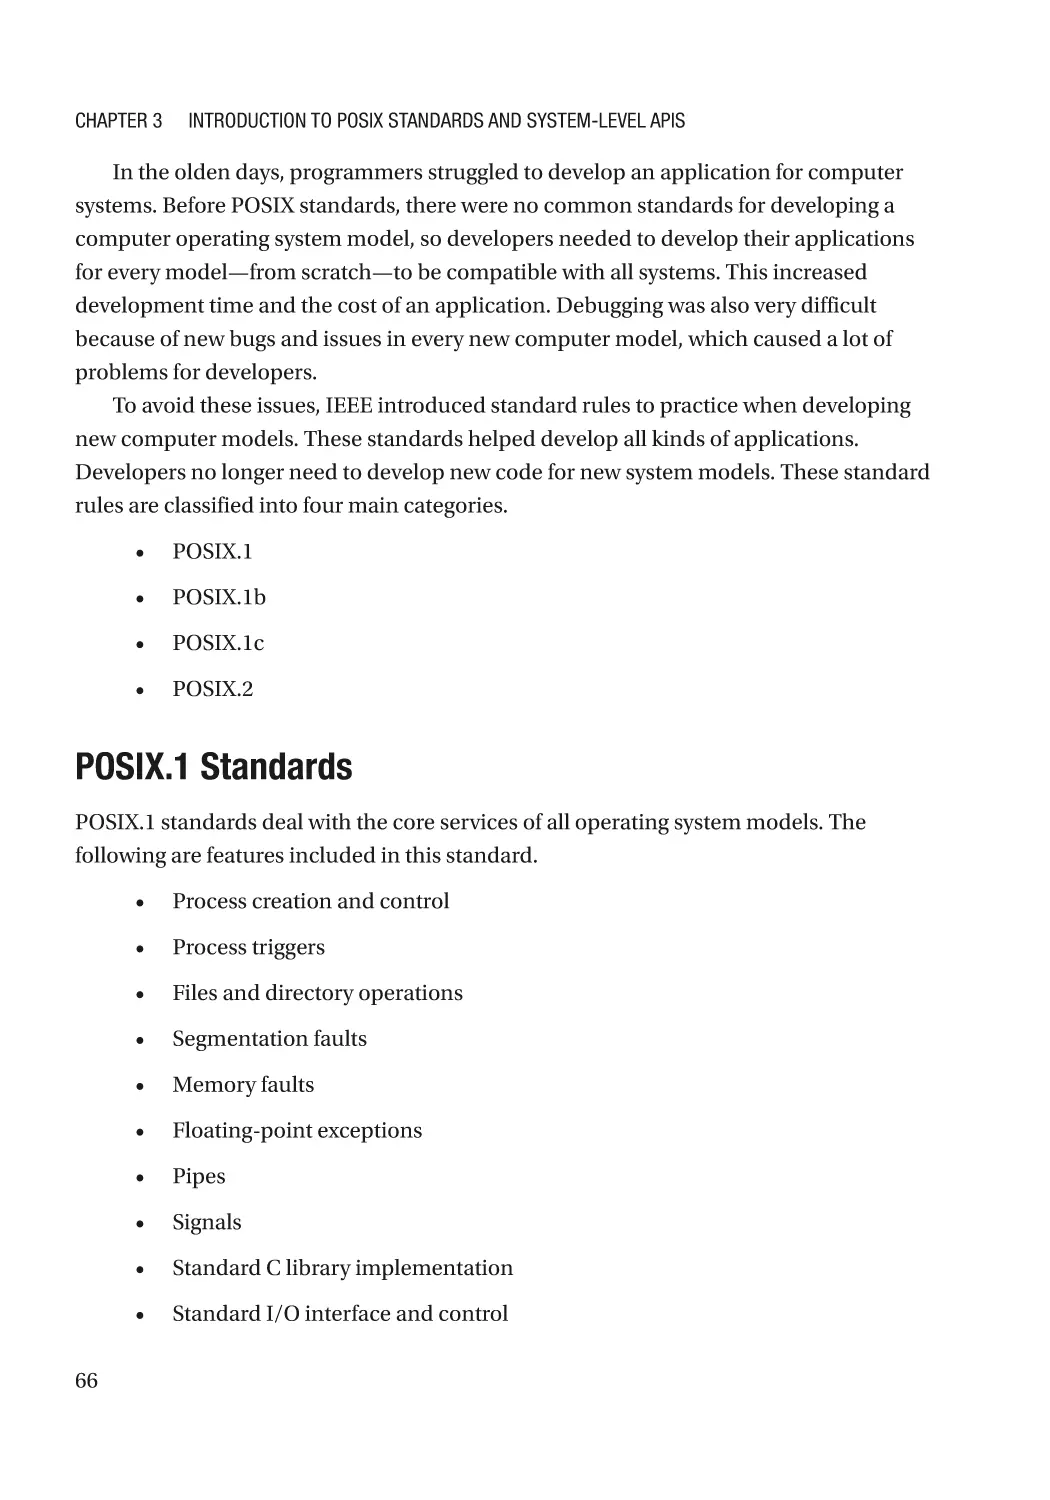 POSIX.1 Standards